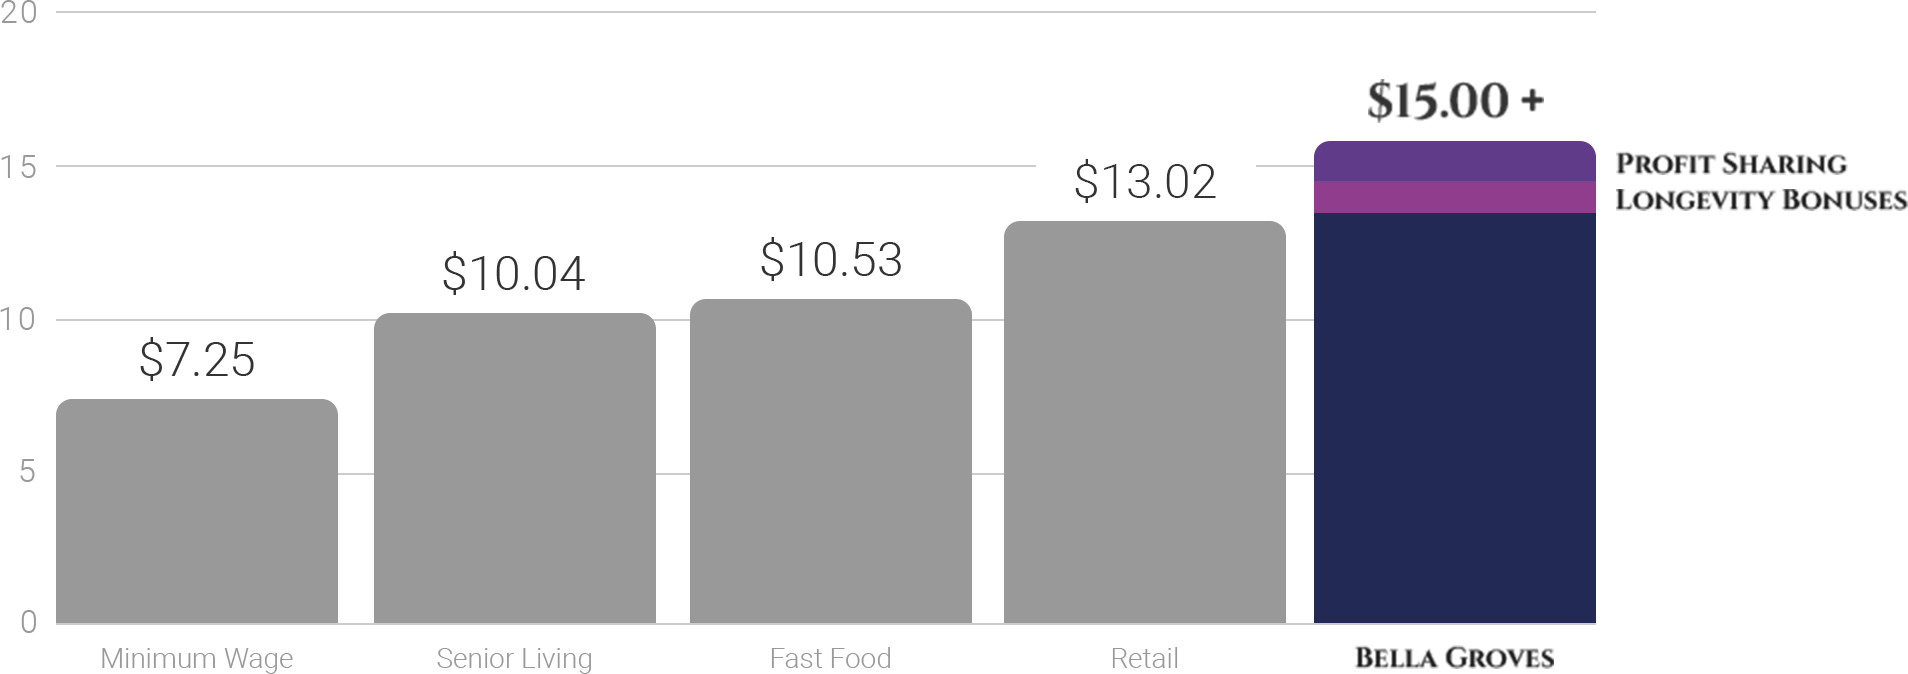 Bella Groves $15+ Profit Sharing and Longevity Bonuses. Retail $13.02. Fast Food $10.53. Senior Living $10.04. Minimum Wage $7.25